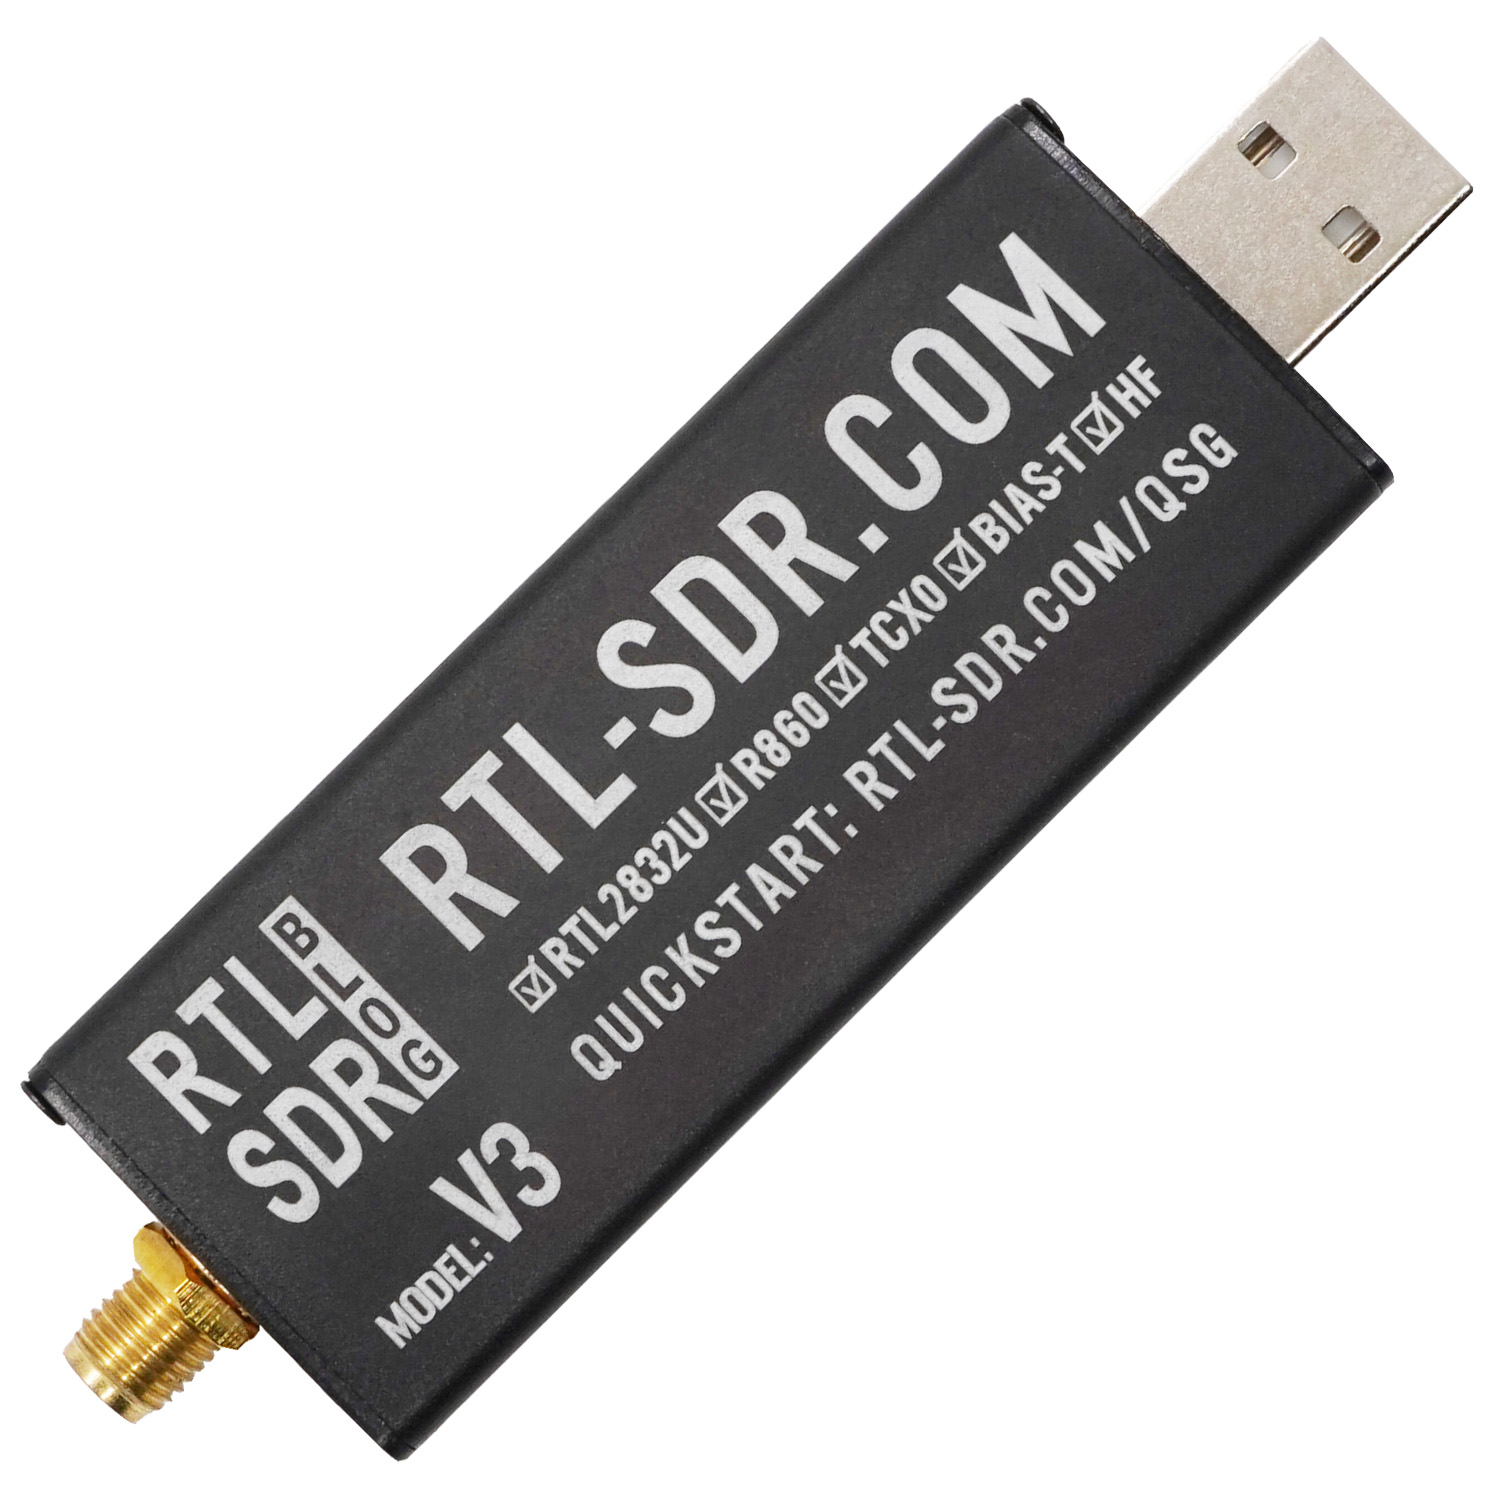 SDR RTL USB key with R820T2 tuner + RTL2832U